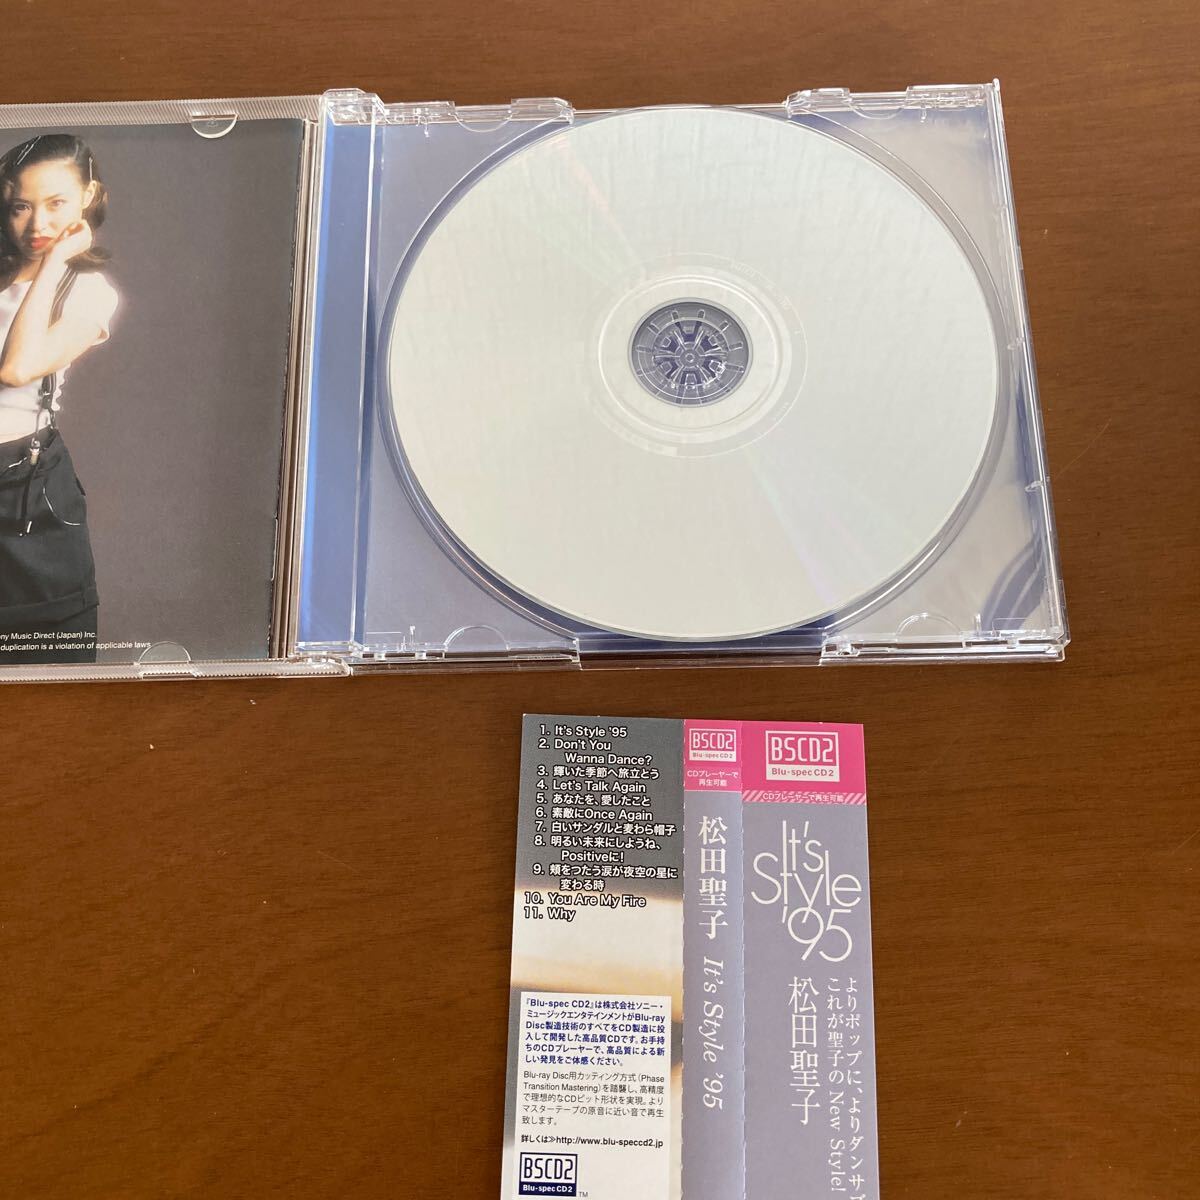 Blu-spec CD2 BSCD2 松田聖子　It's style 95 2014年再発 1995年作品_画像4